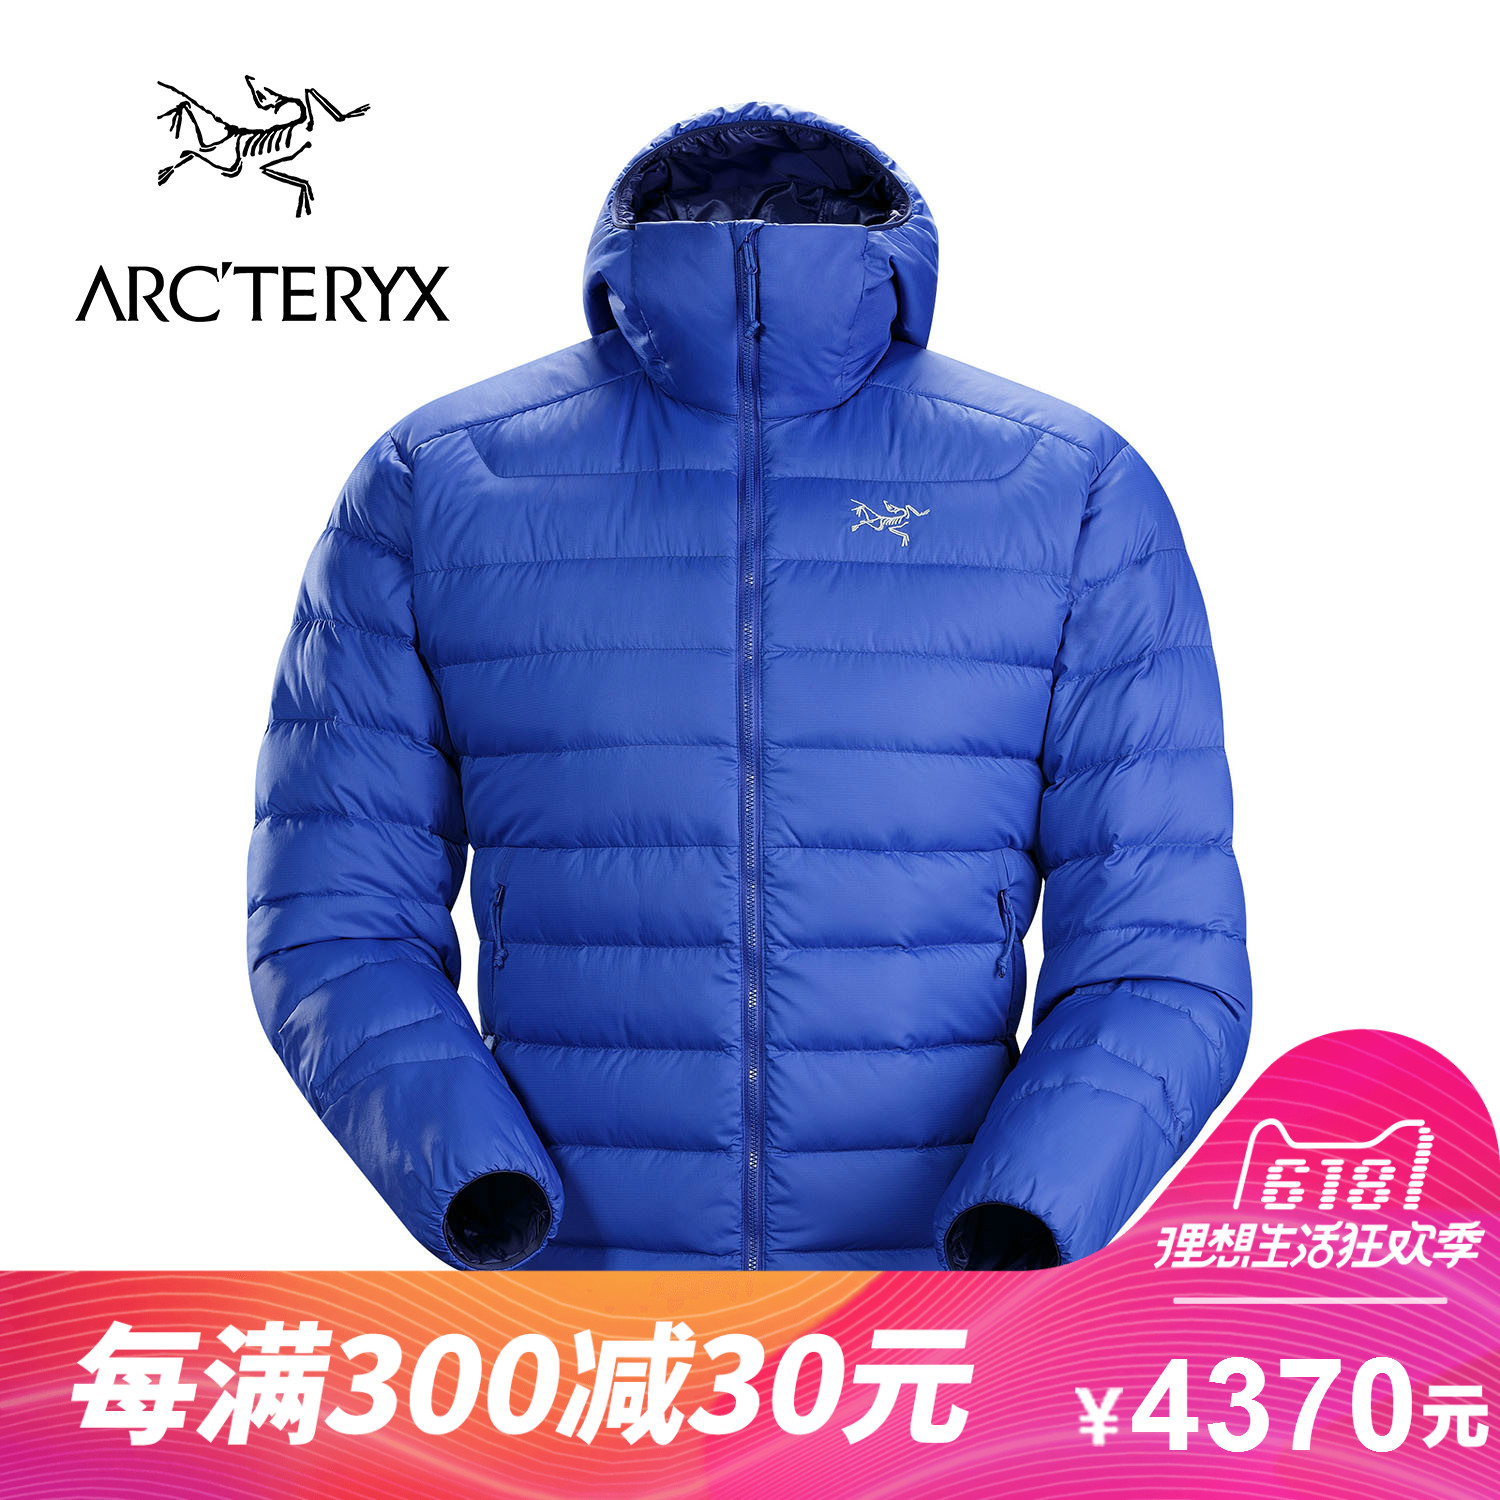 ARCTERYX/Archaeopteryx Men's Lightweight Warm Down Suit Thorium AR Hoody 17231